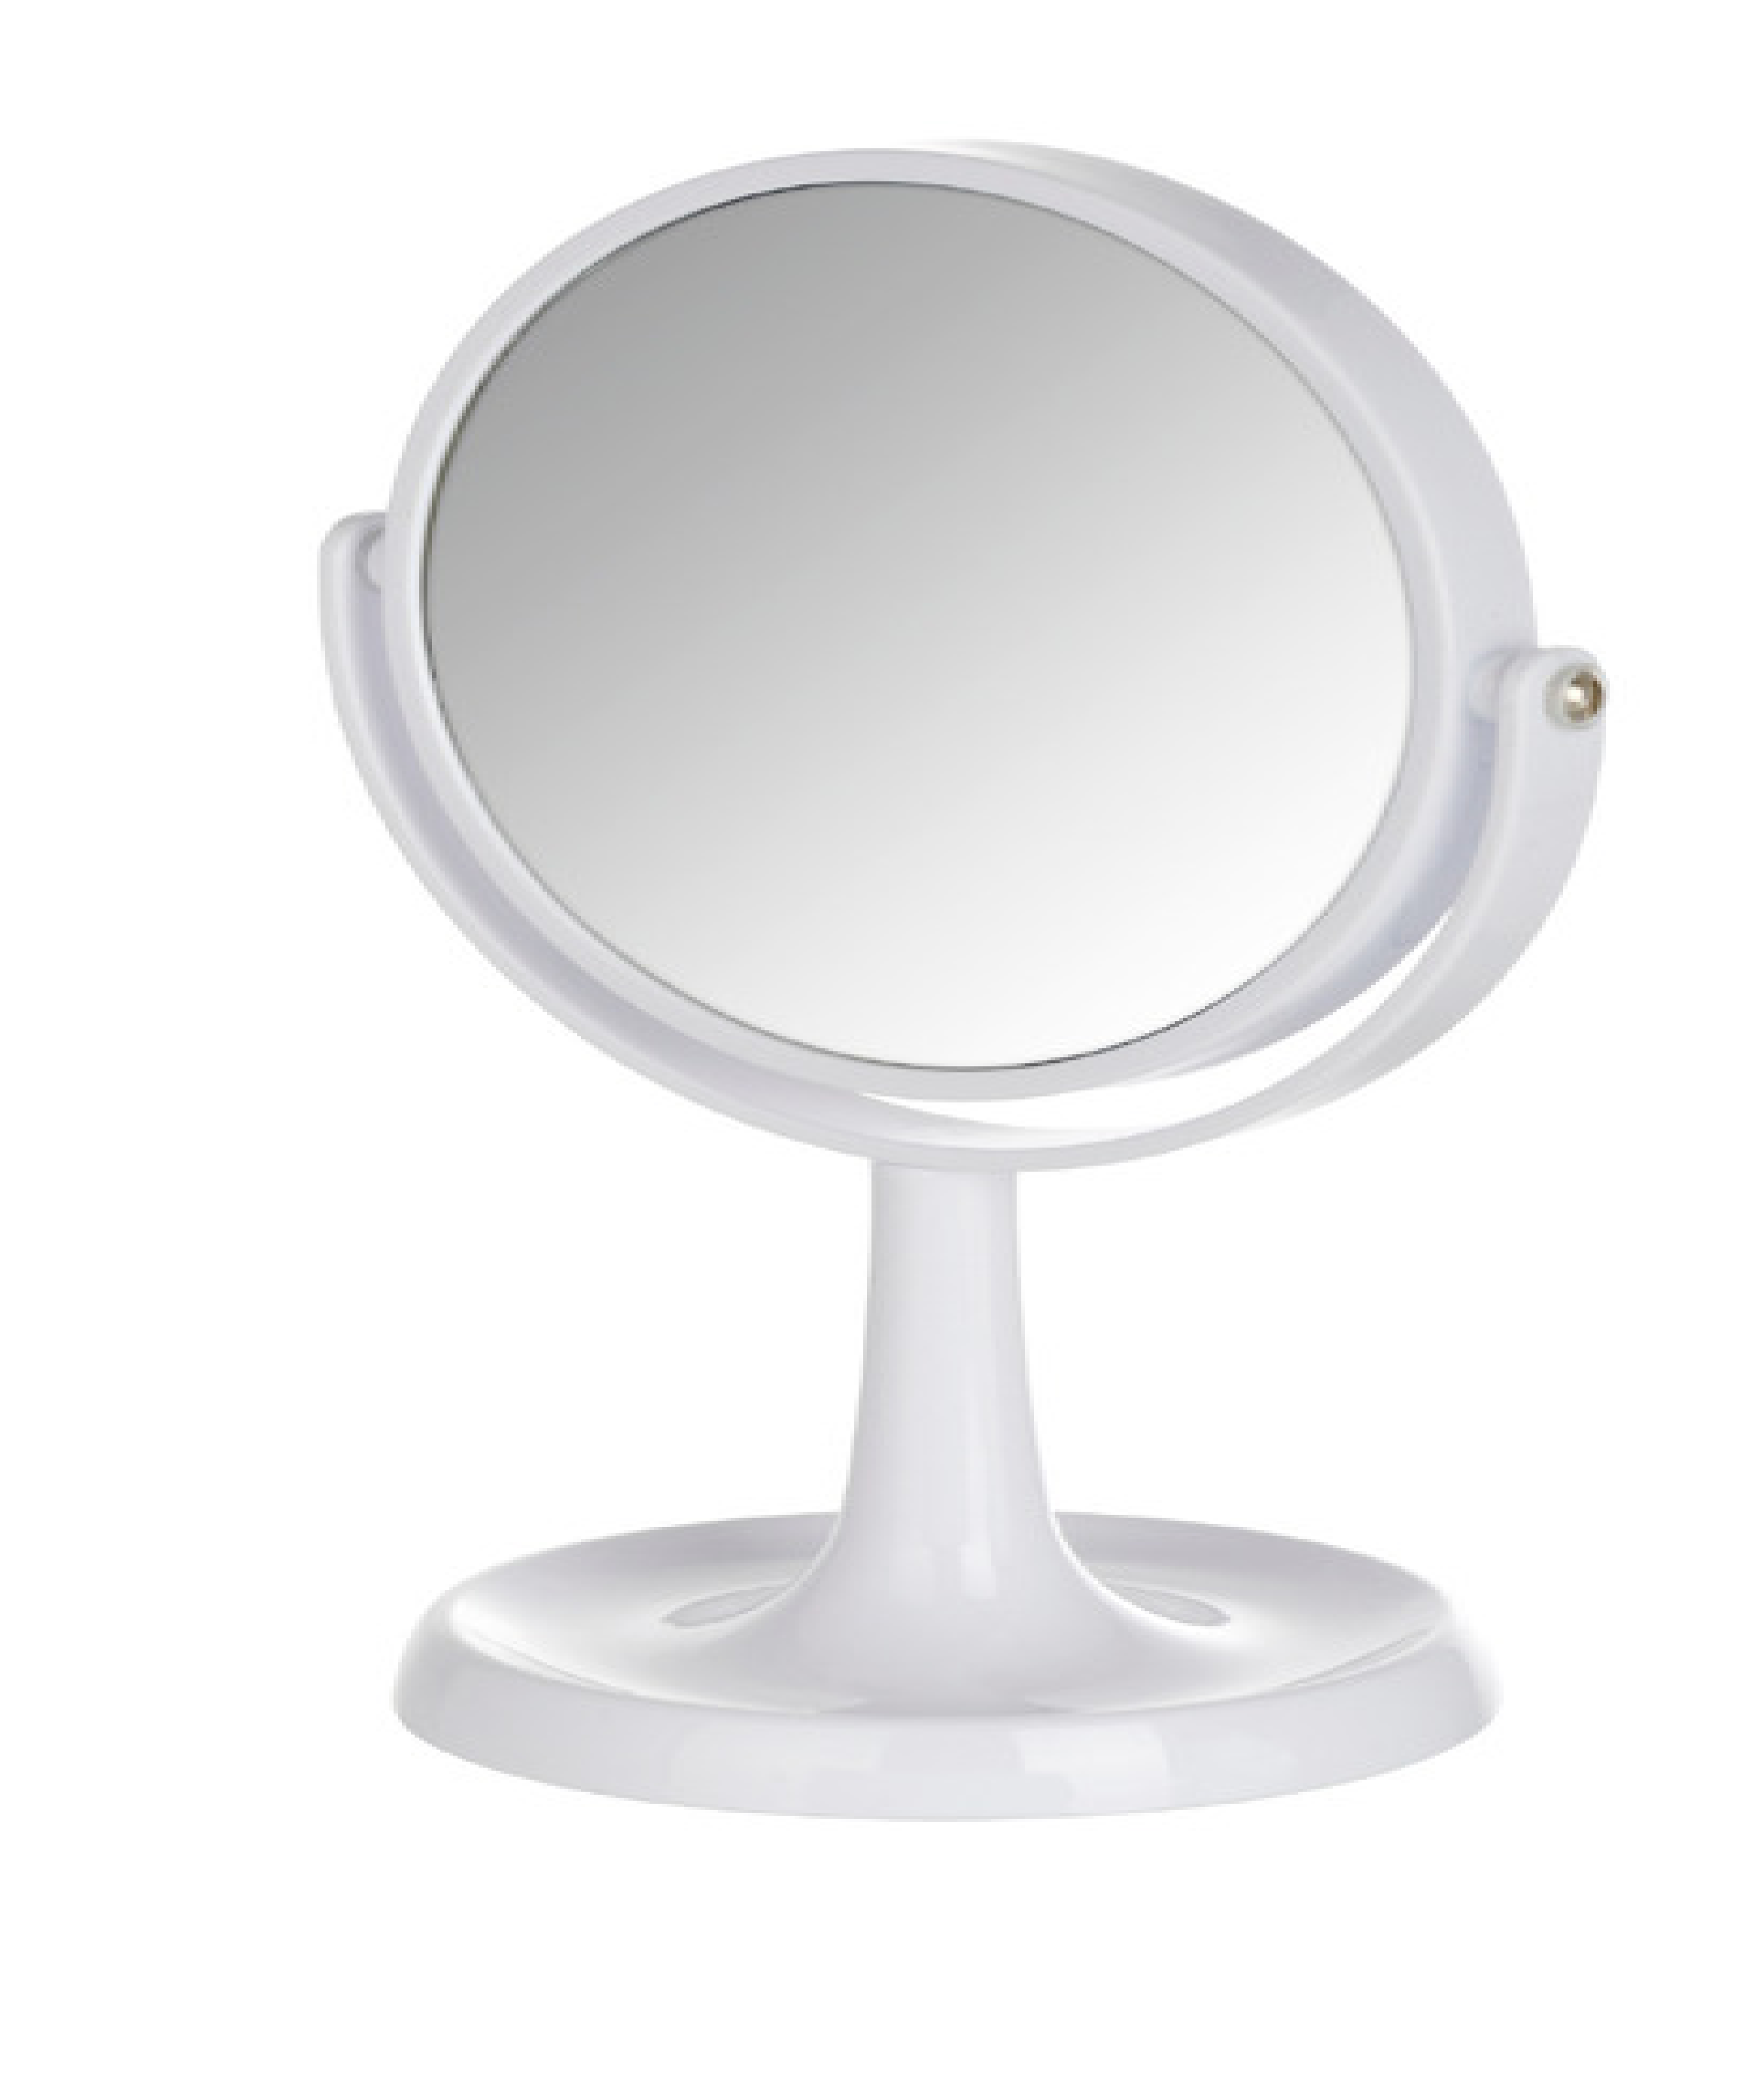 Kosmetikspiegel Acryl Durchmesser 16 cm Wenko